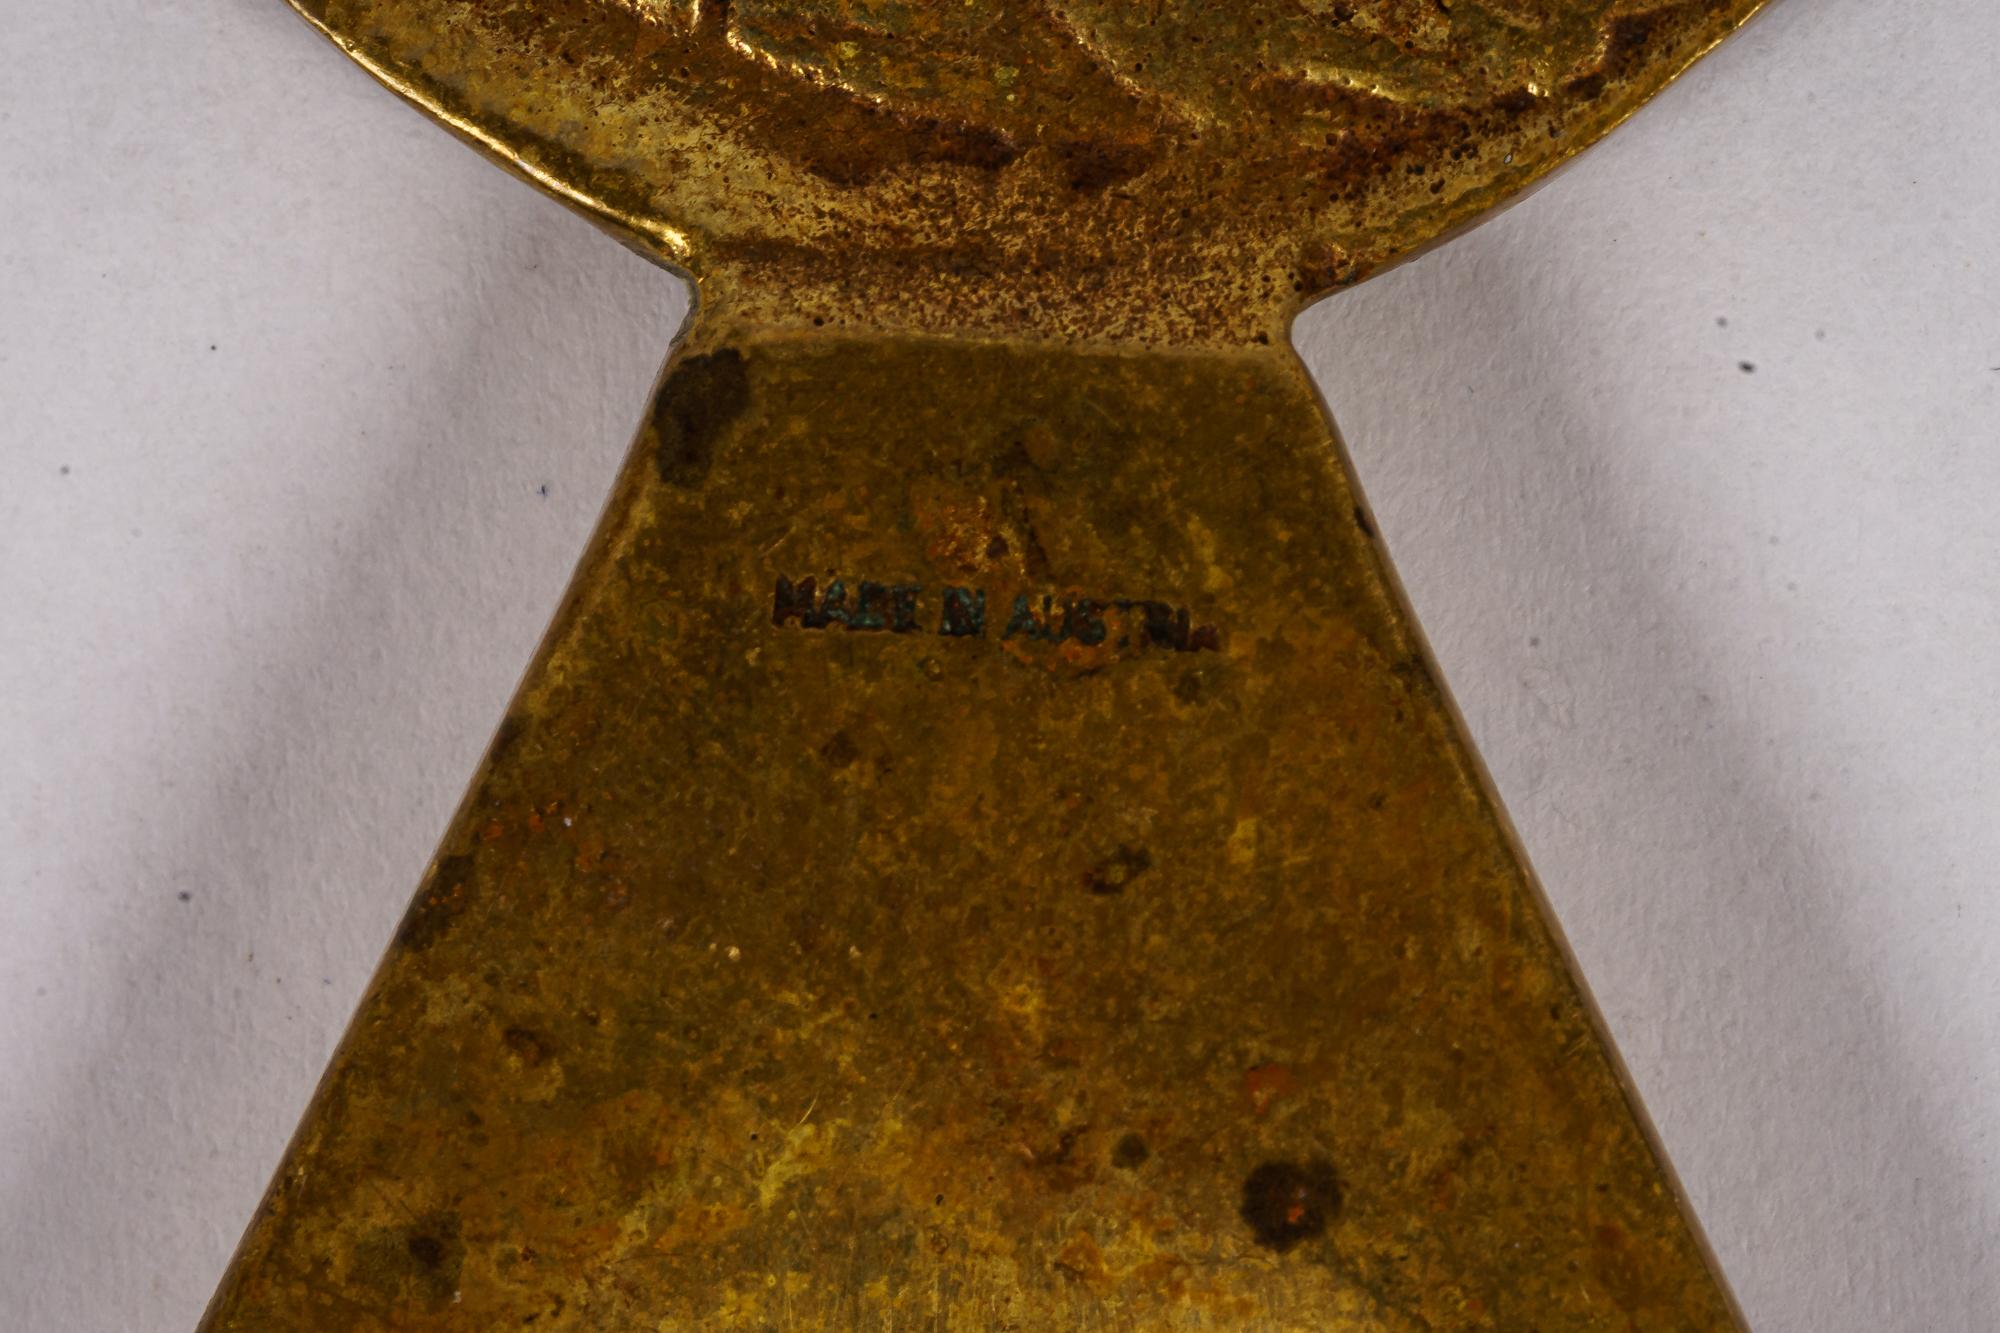 antique brass bottle opener